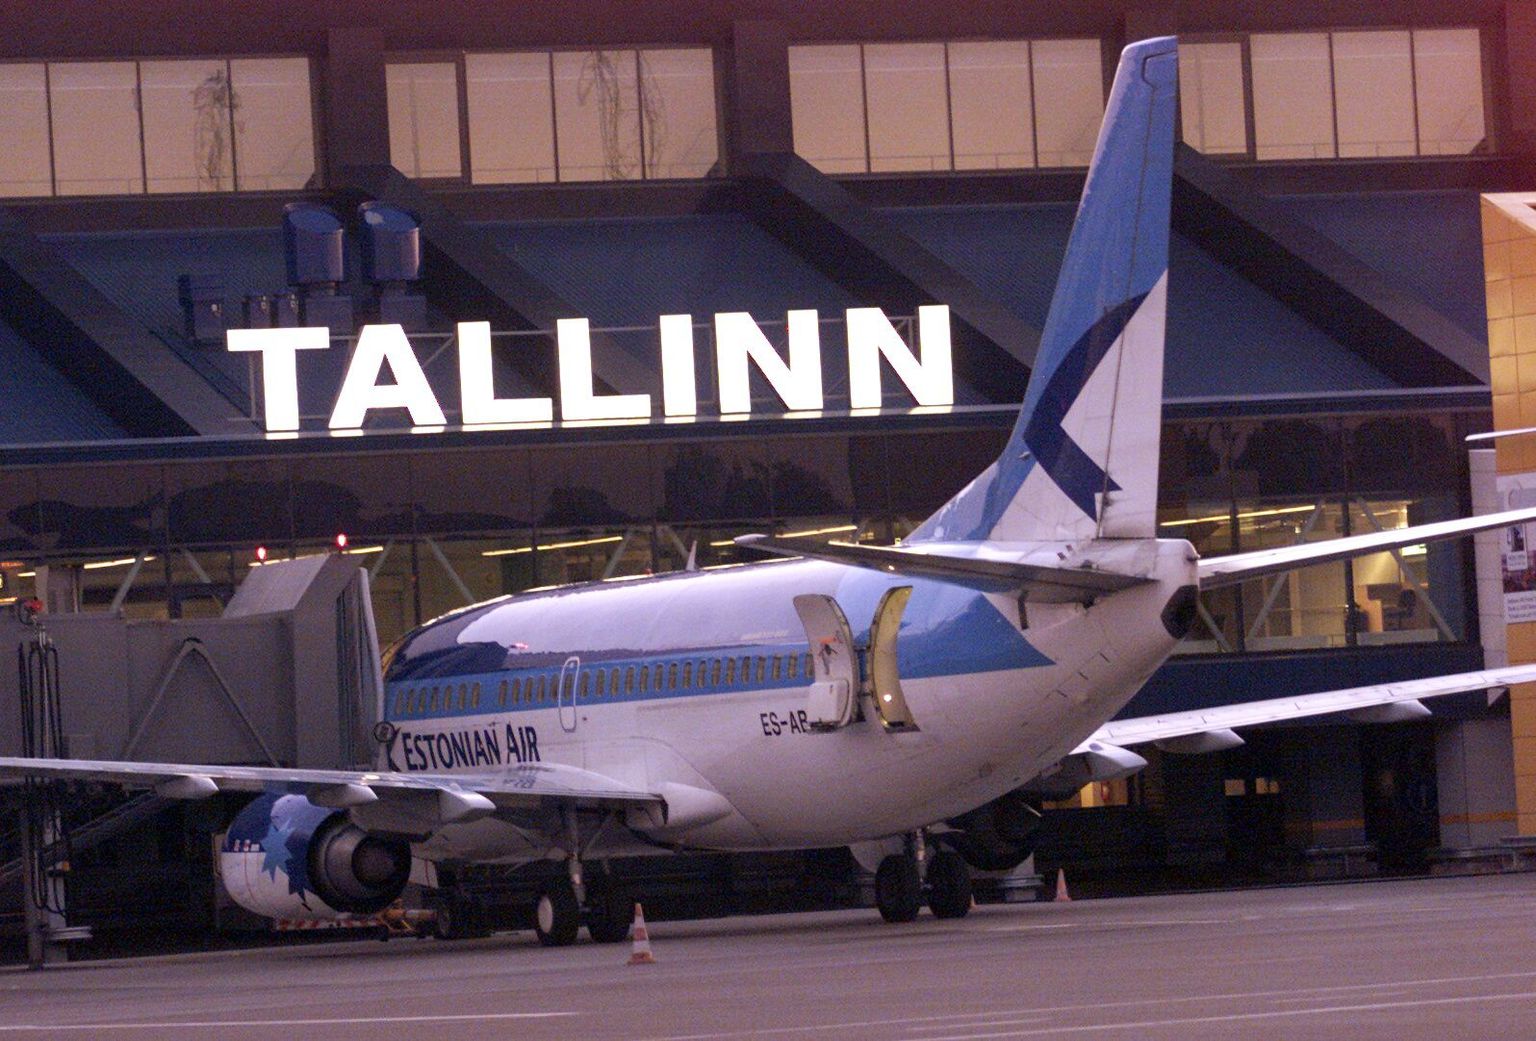 Таллиннский аэропорт. Иллюстративное фото.